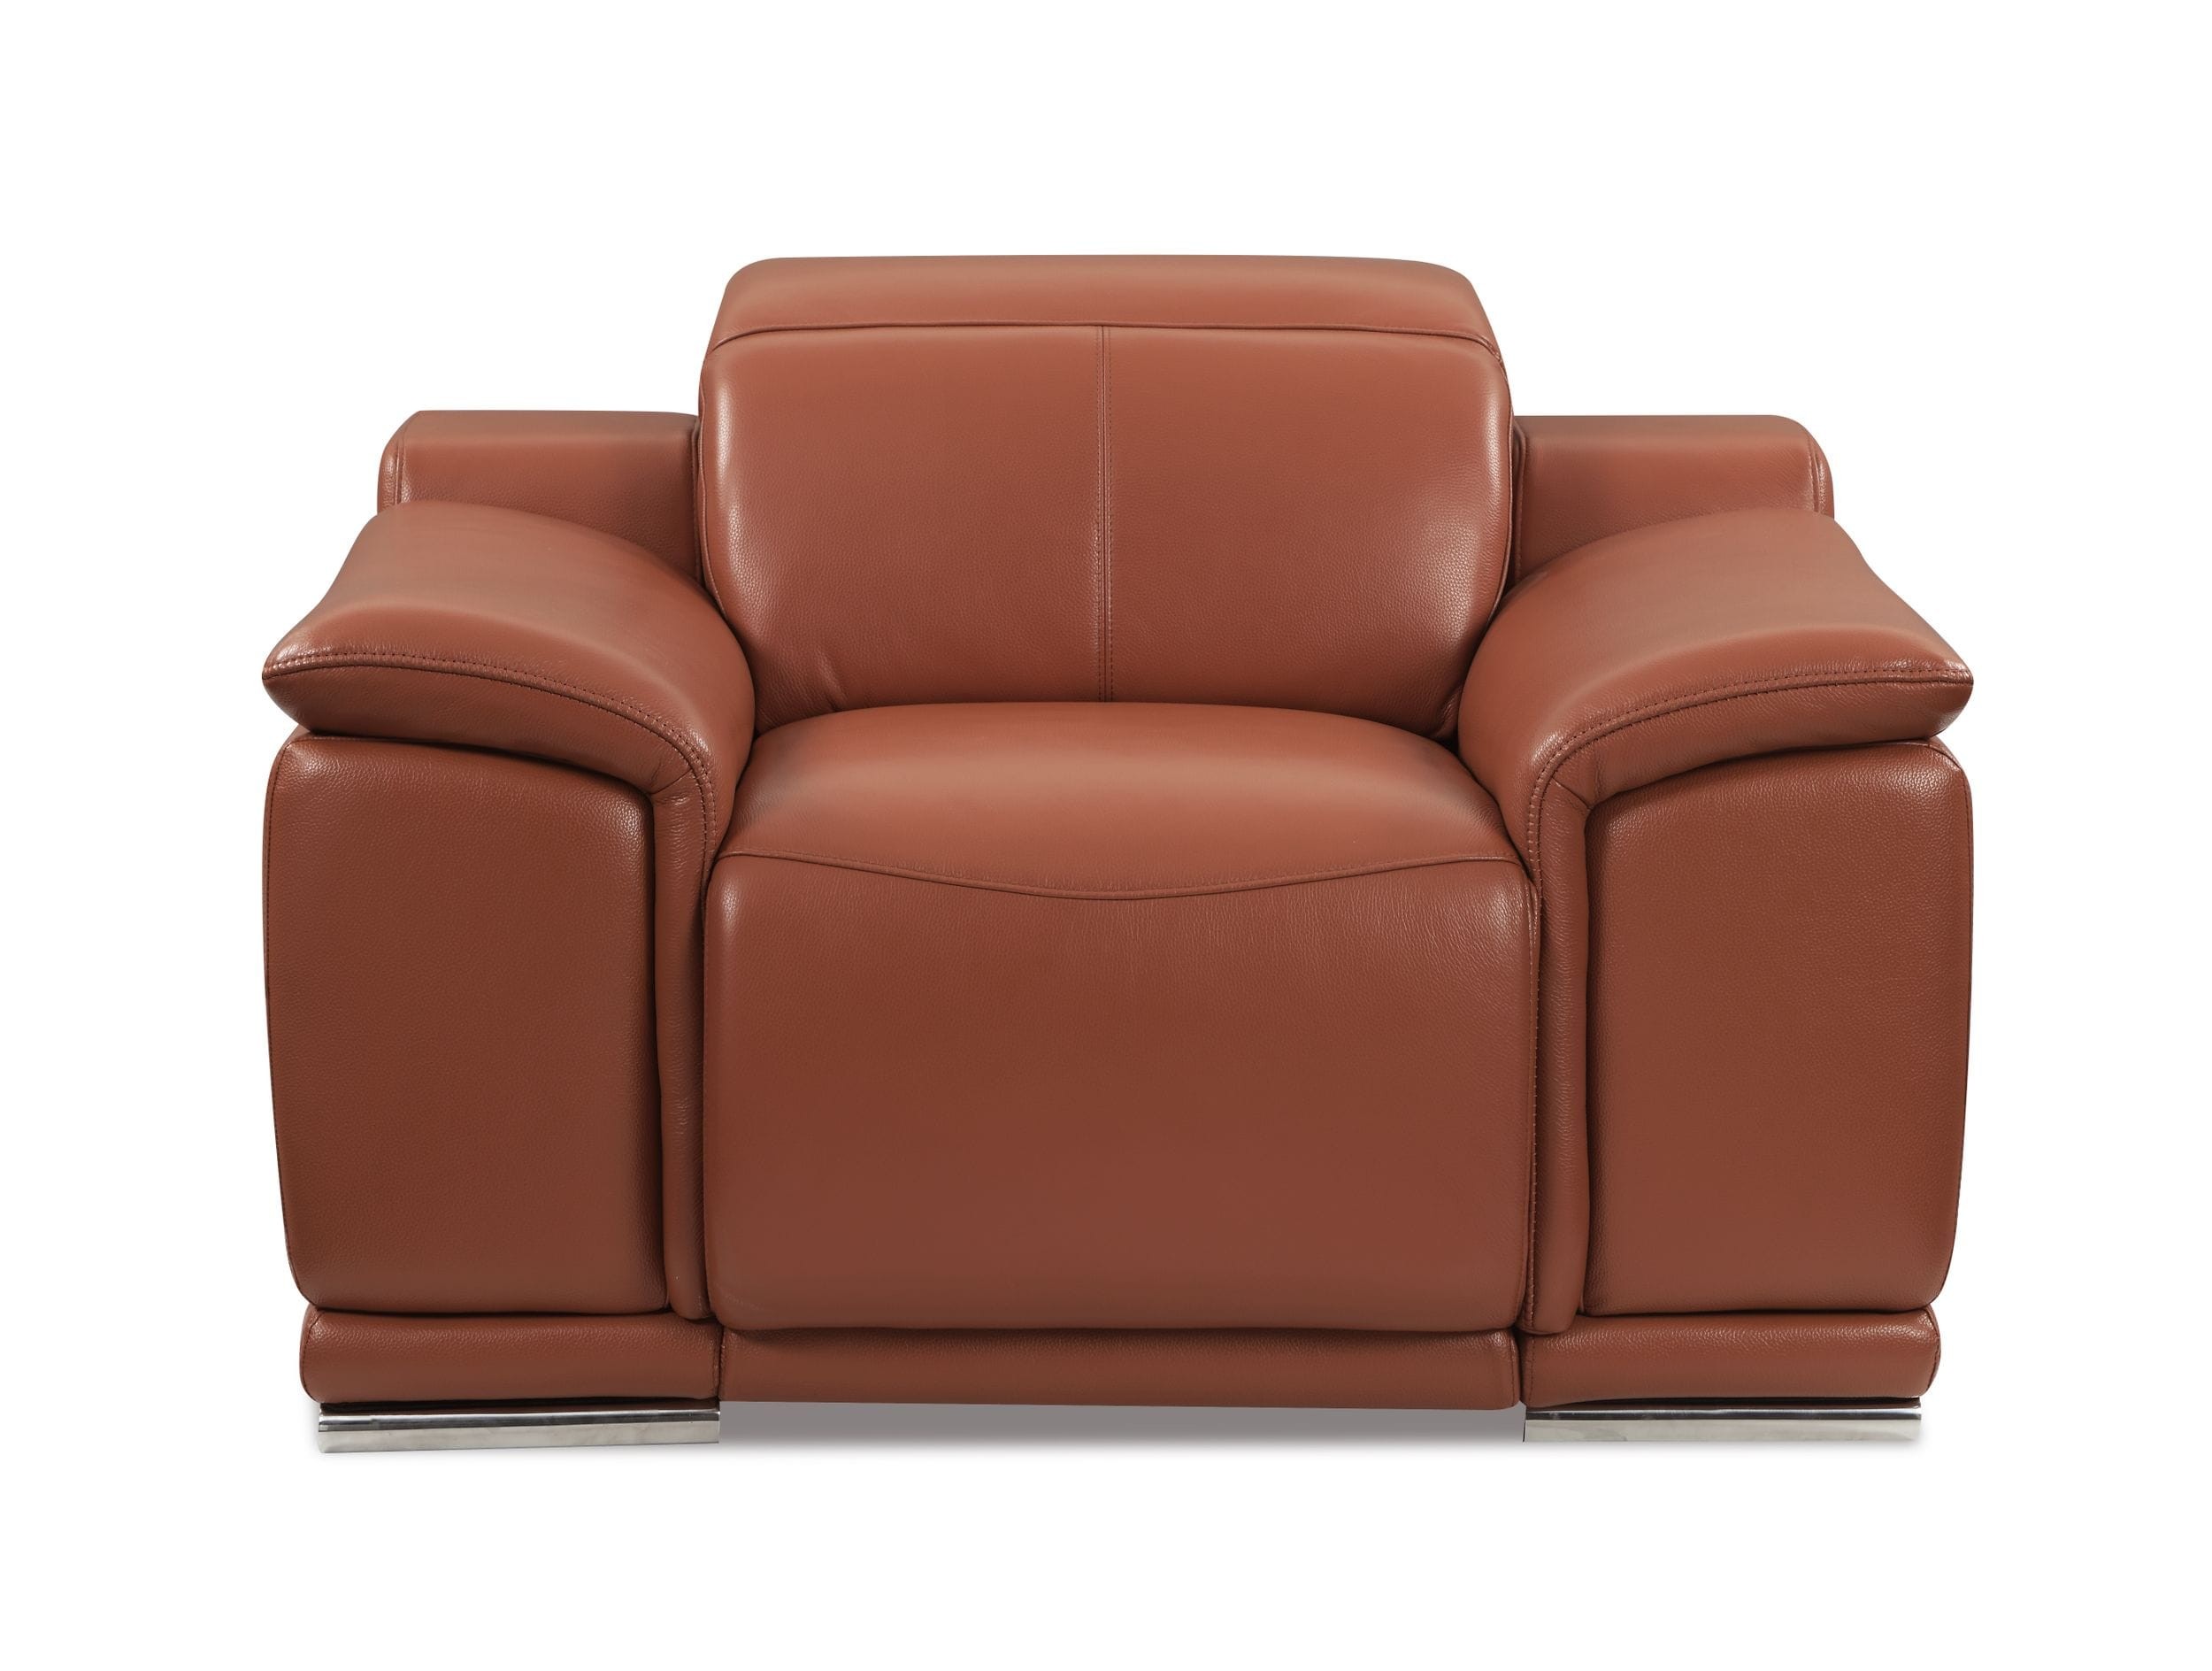 jedda camel leather sofa